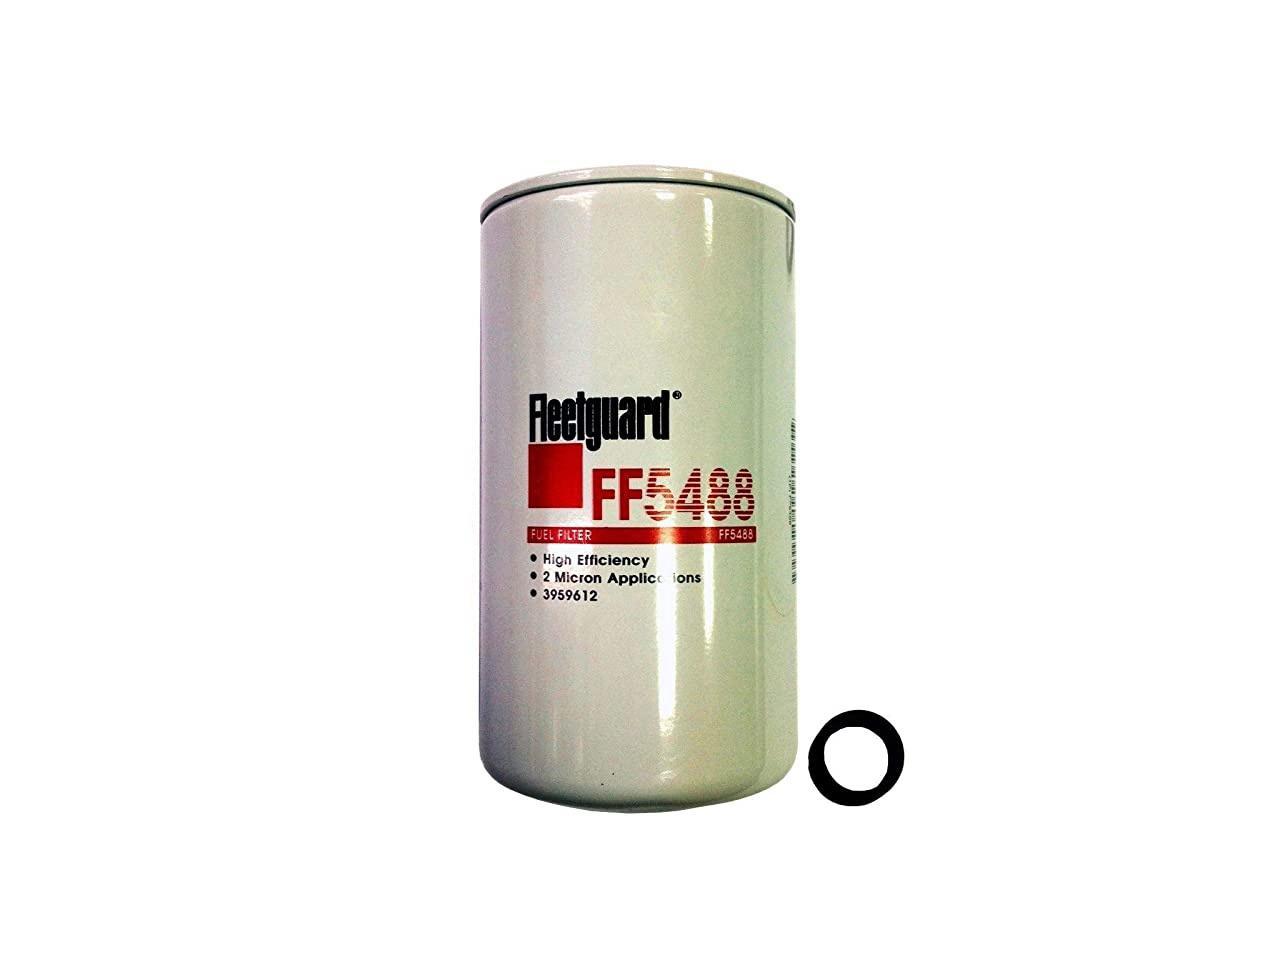 FF5488 Fuel Filter For Cummins 3959612, 98.7% Efficiency, 5-Micron 5 Micron Fuel Filter 5.9 Cummins